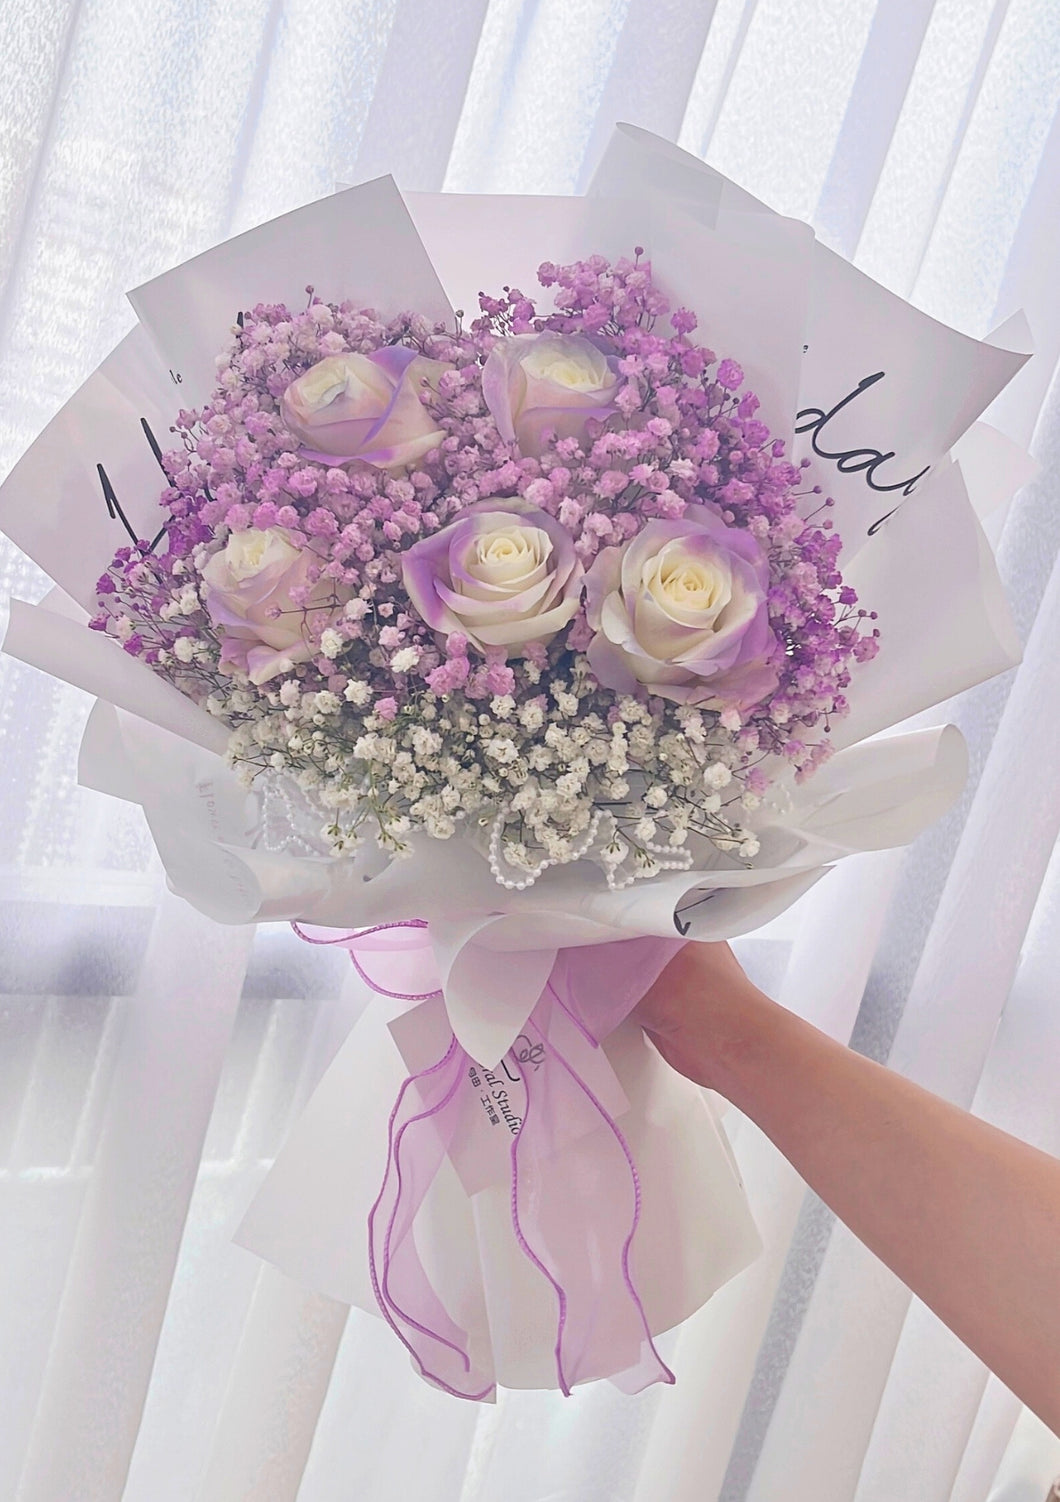 5 Amethyst Purple Fresh Rose Flower with White Baby Breath Bouquet 5朵紫晶色鲜花玫瑰白色满天星花束